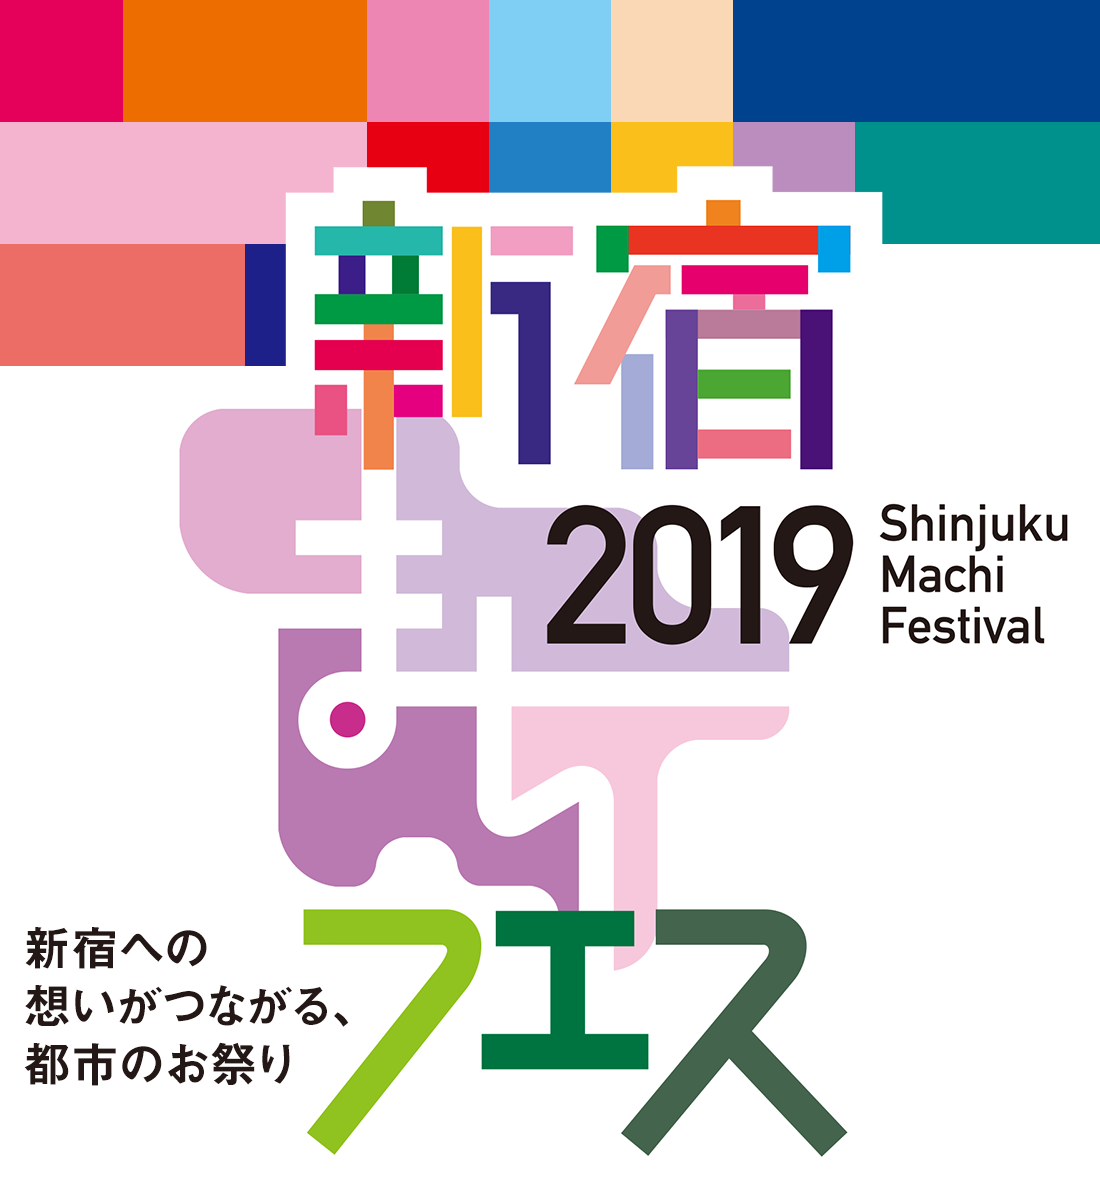 Festival Shinjuku Machi Festival 2019 of city where thought to Shinjuku leads to